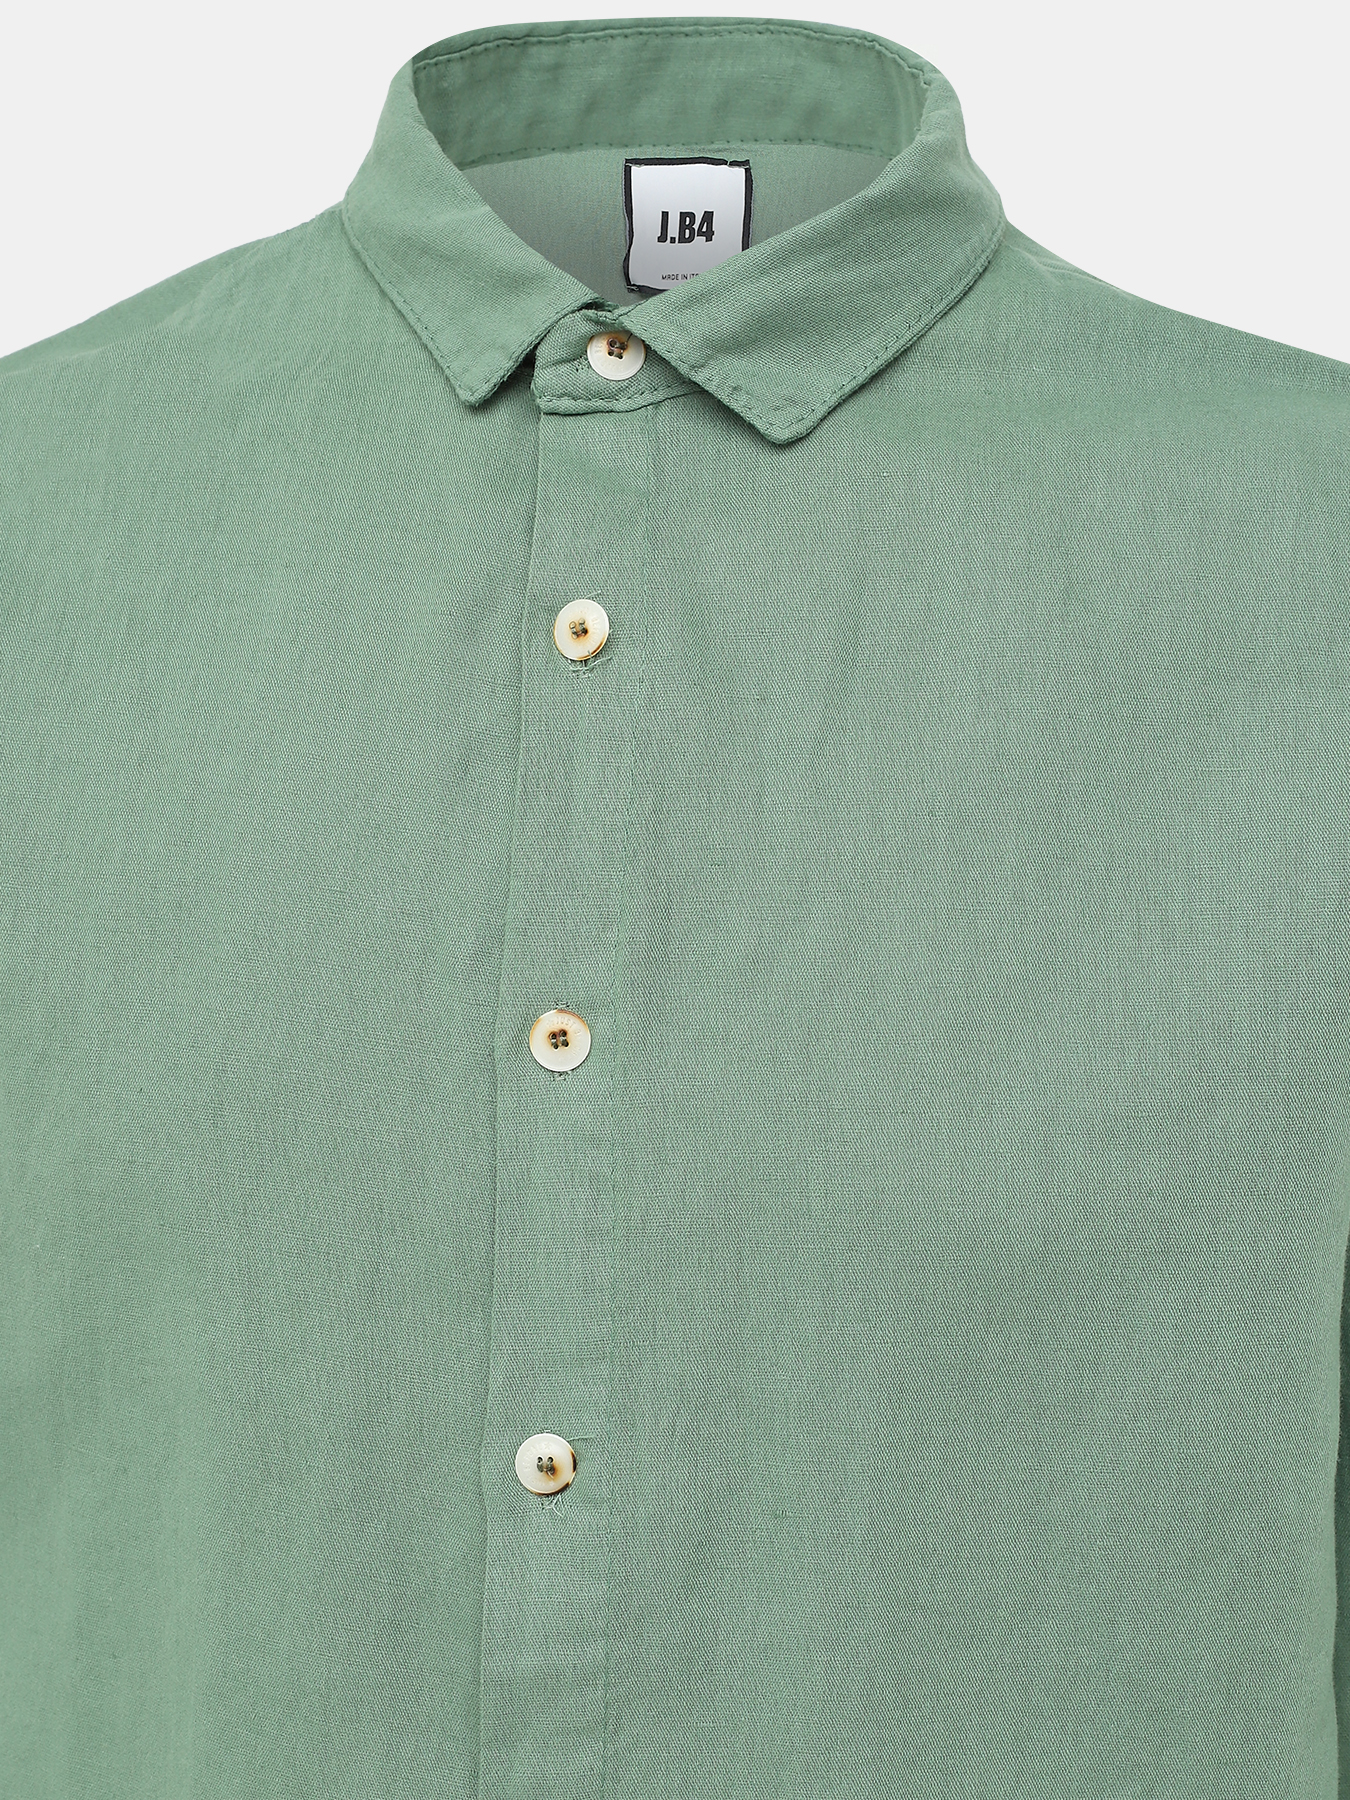 Рубашка J.B4 434629-044, цвет зеленый, размер 50 - фото 3